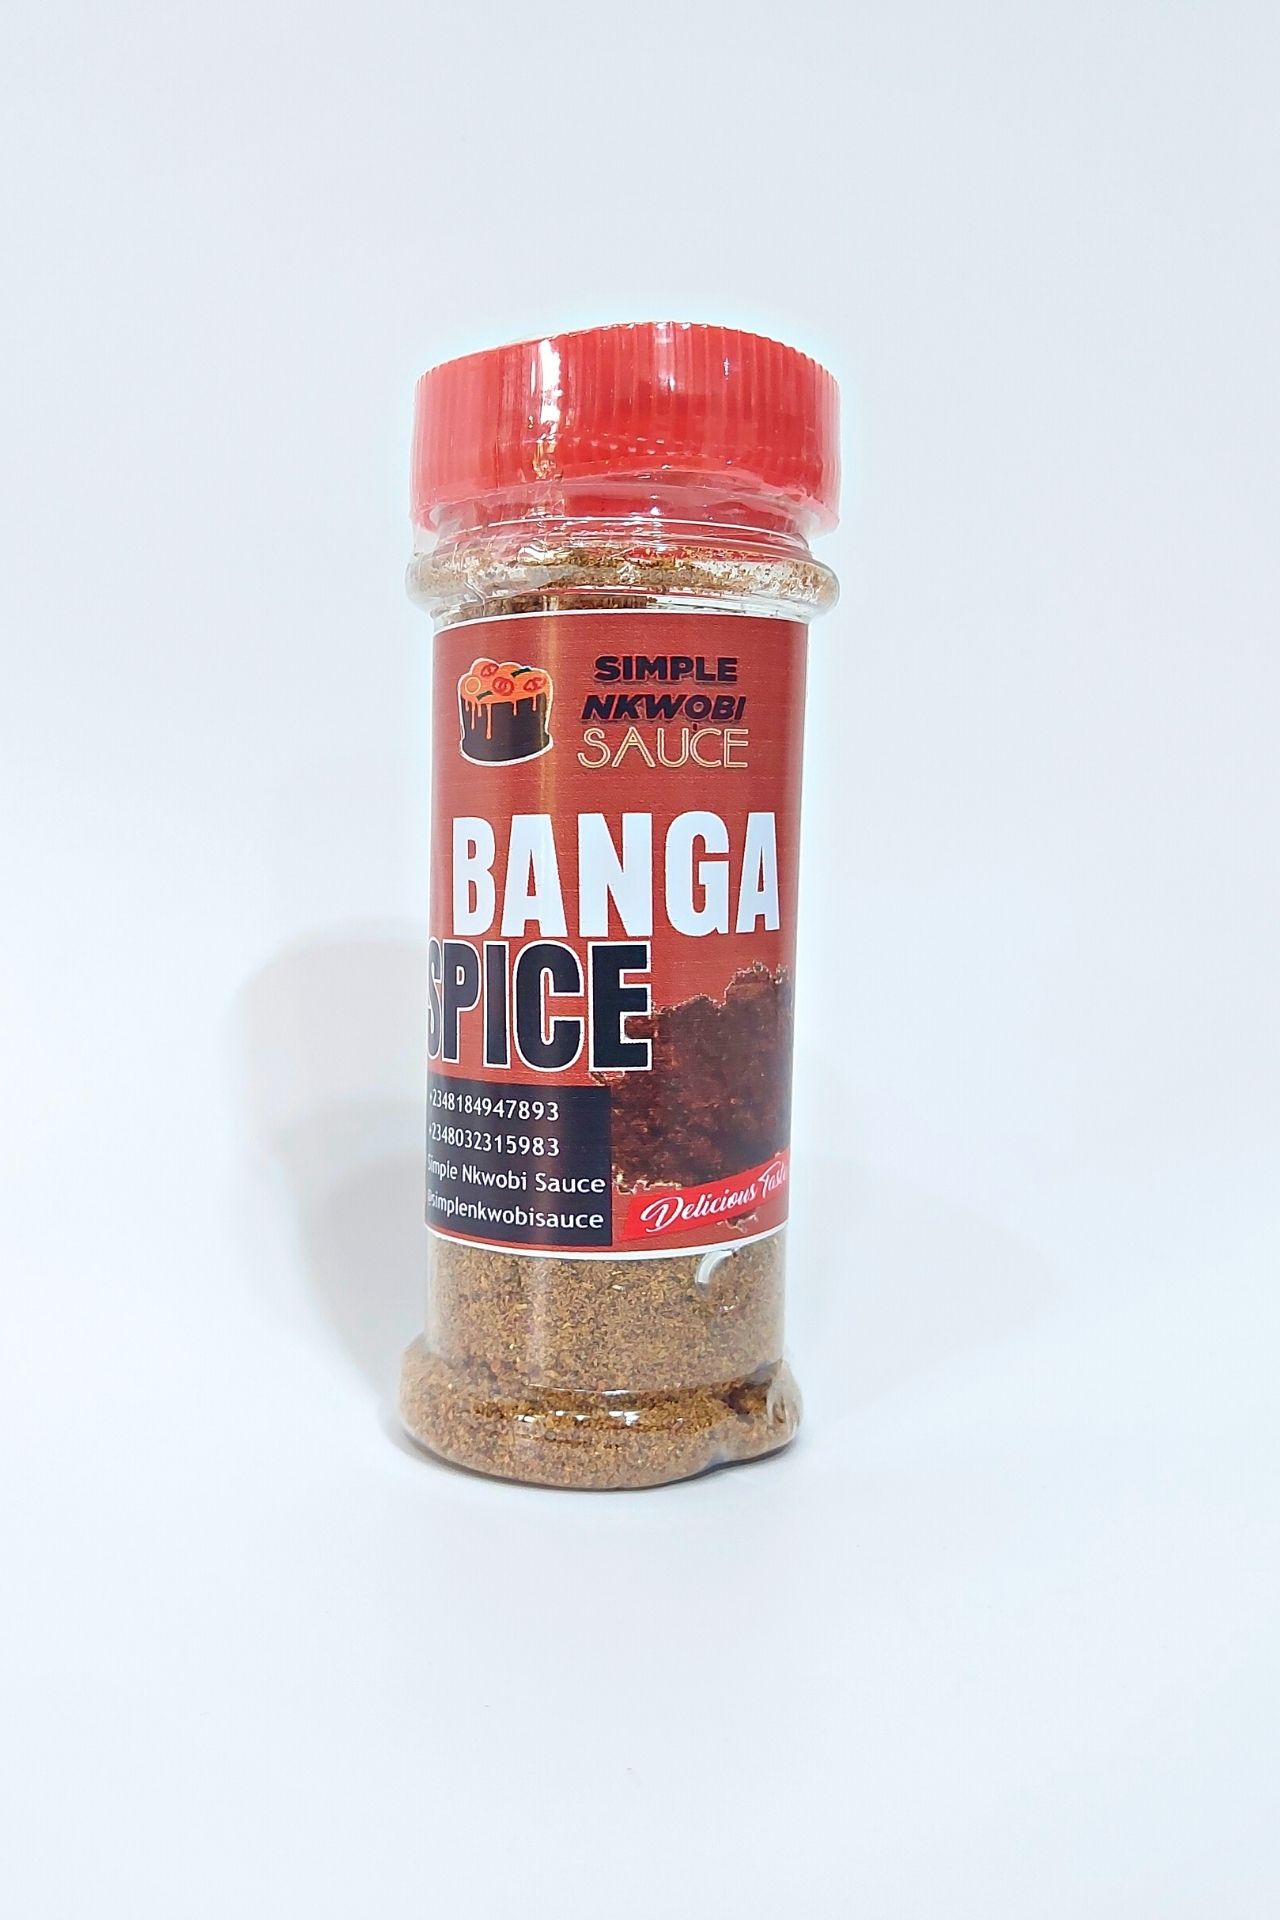 Banga Spice